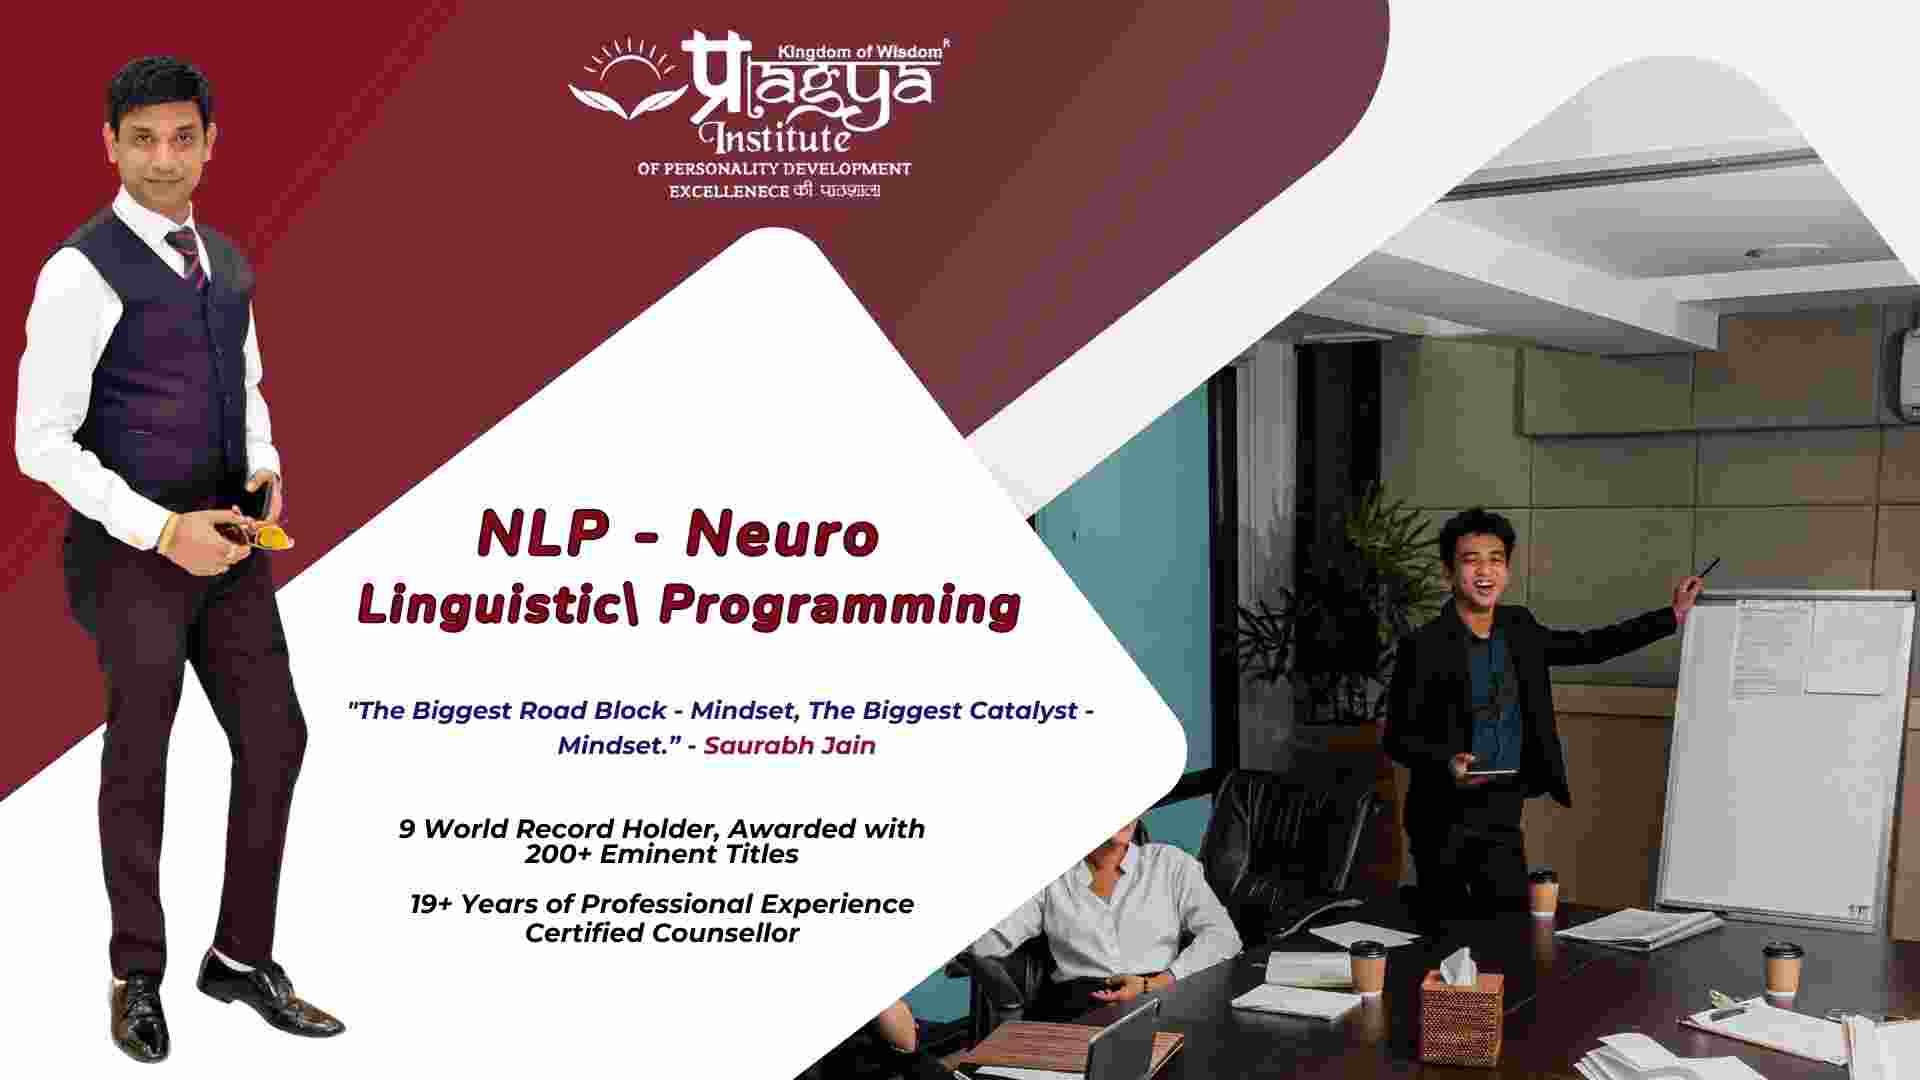 NLP - Neuro Linguistic Programming